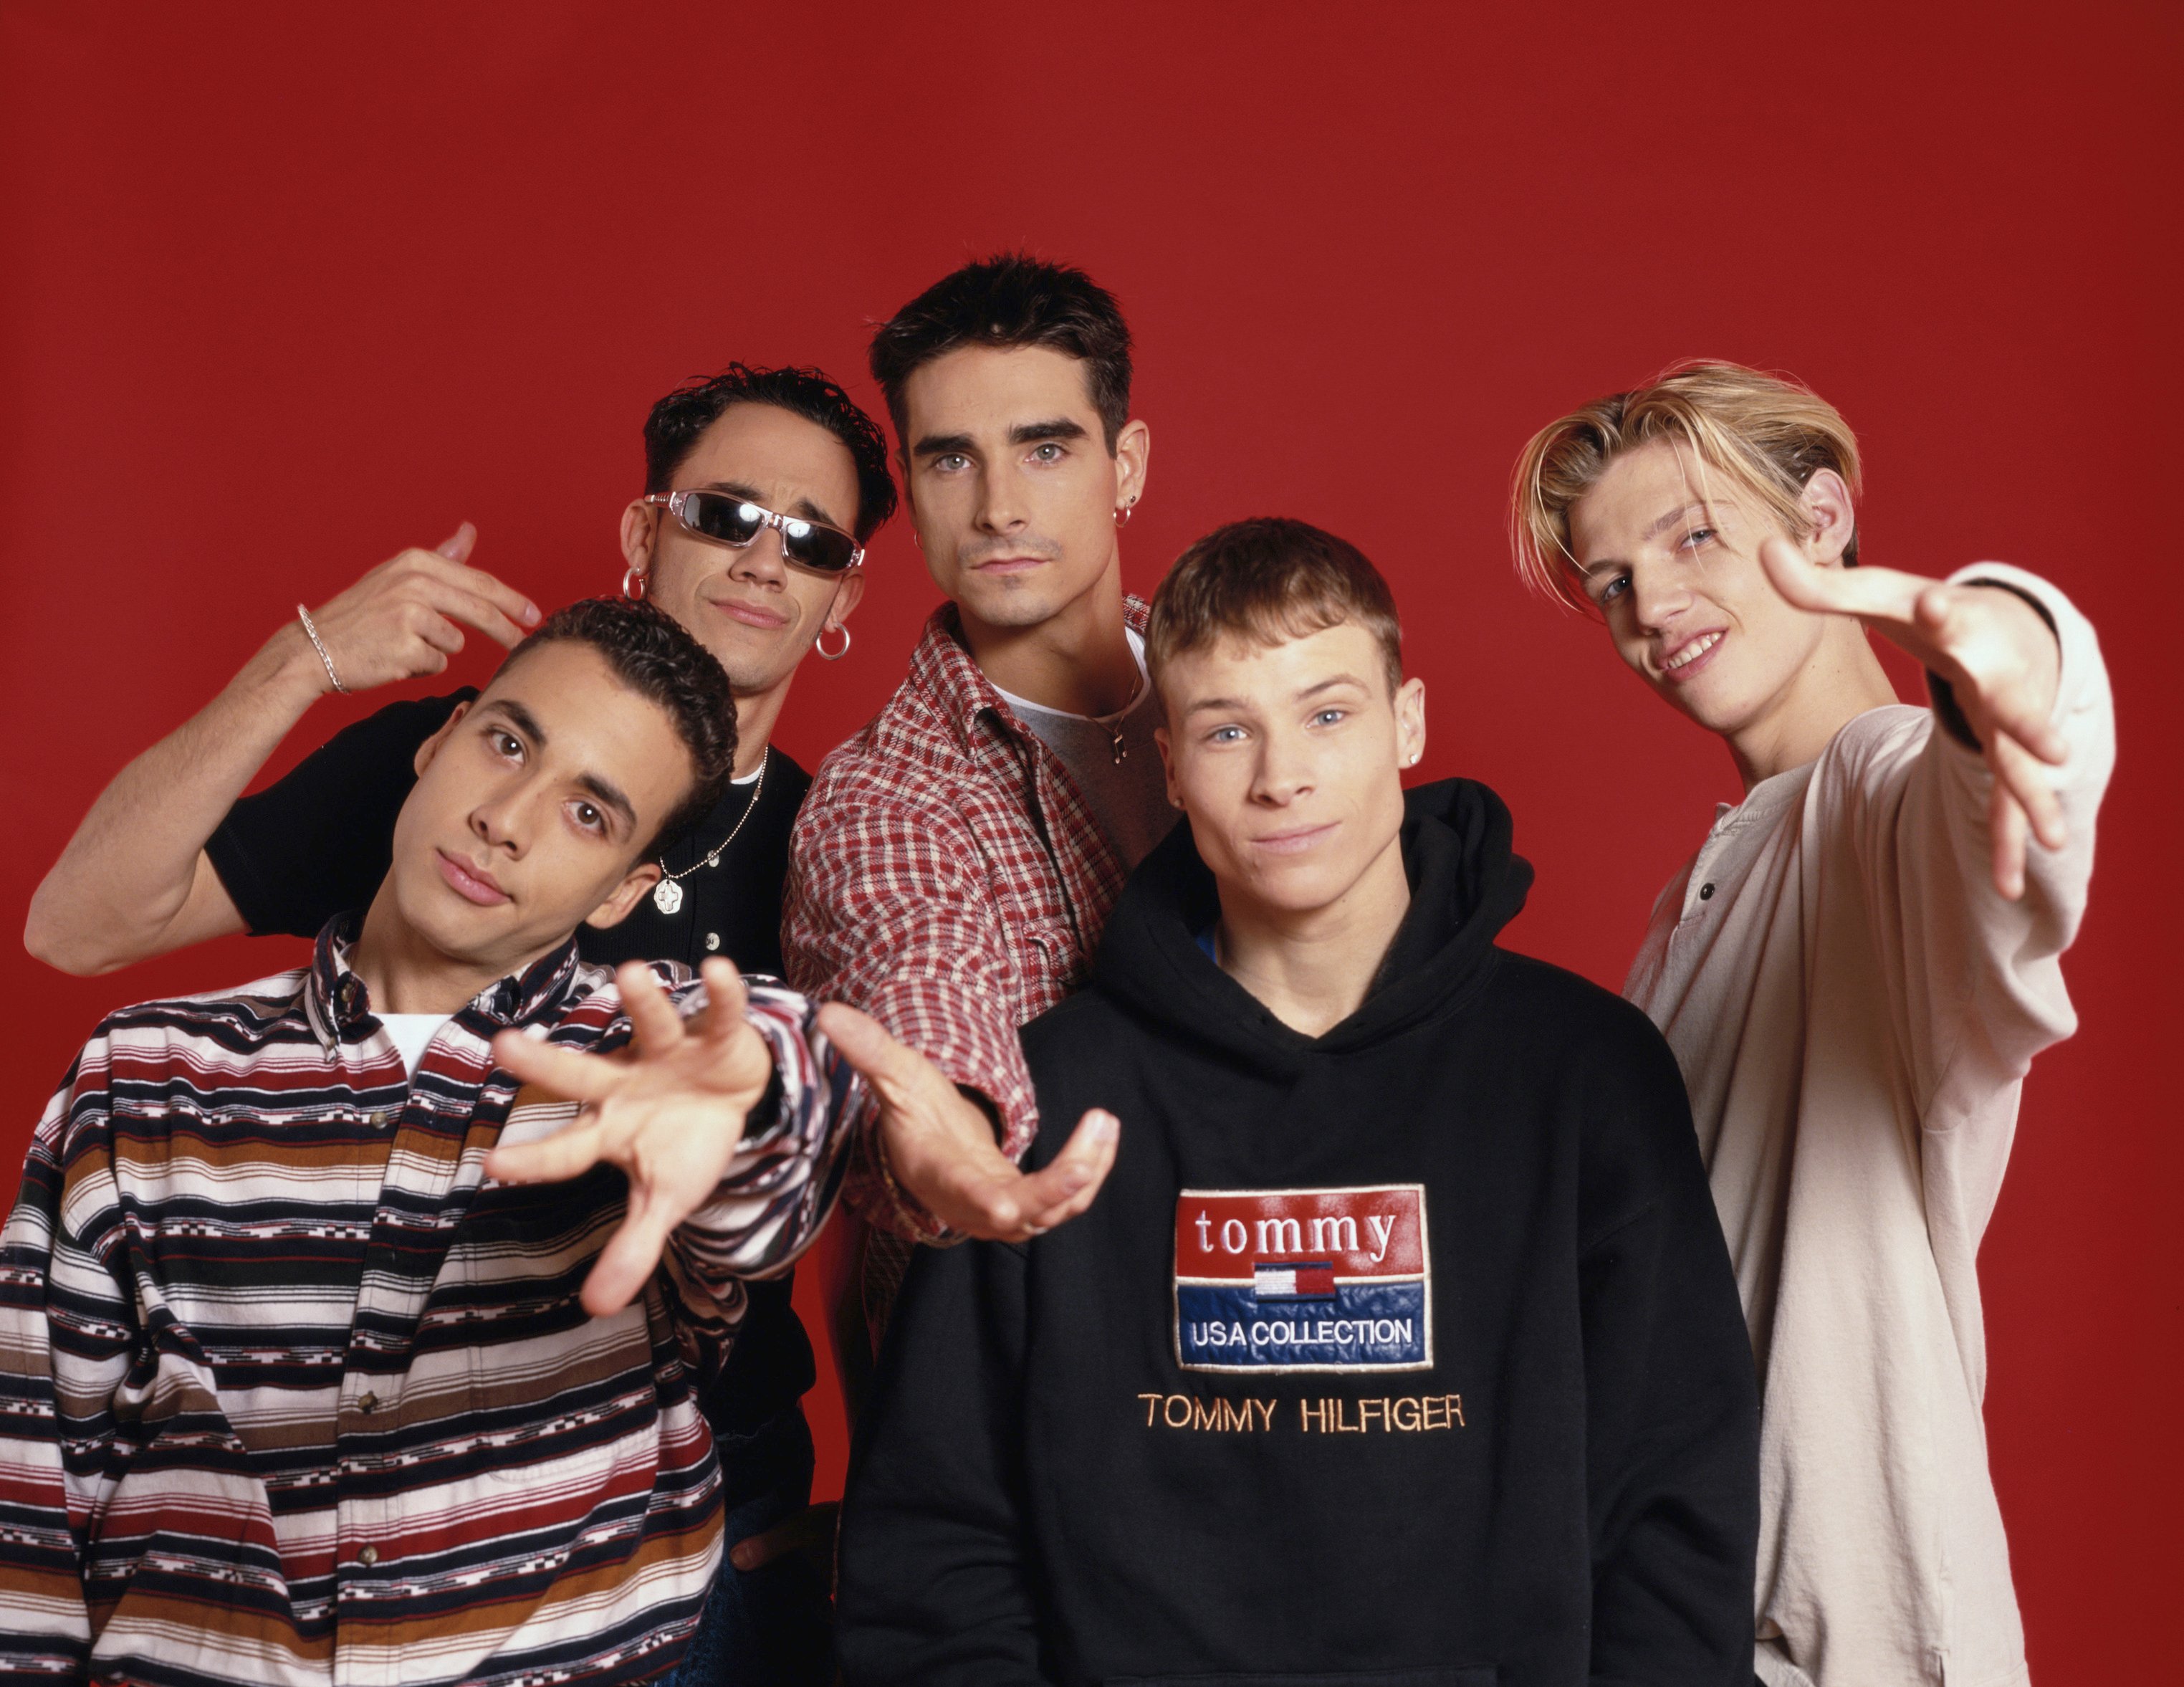 American boy band The Backstreet Boys, circa 1995 (Brian Littrell, Nick Carter, A. J. McLean, Howie Dorough and Kevin Richardson)